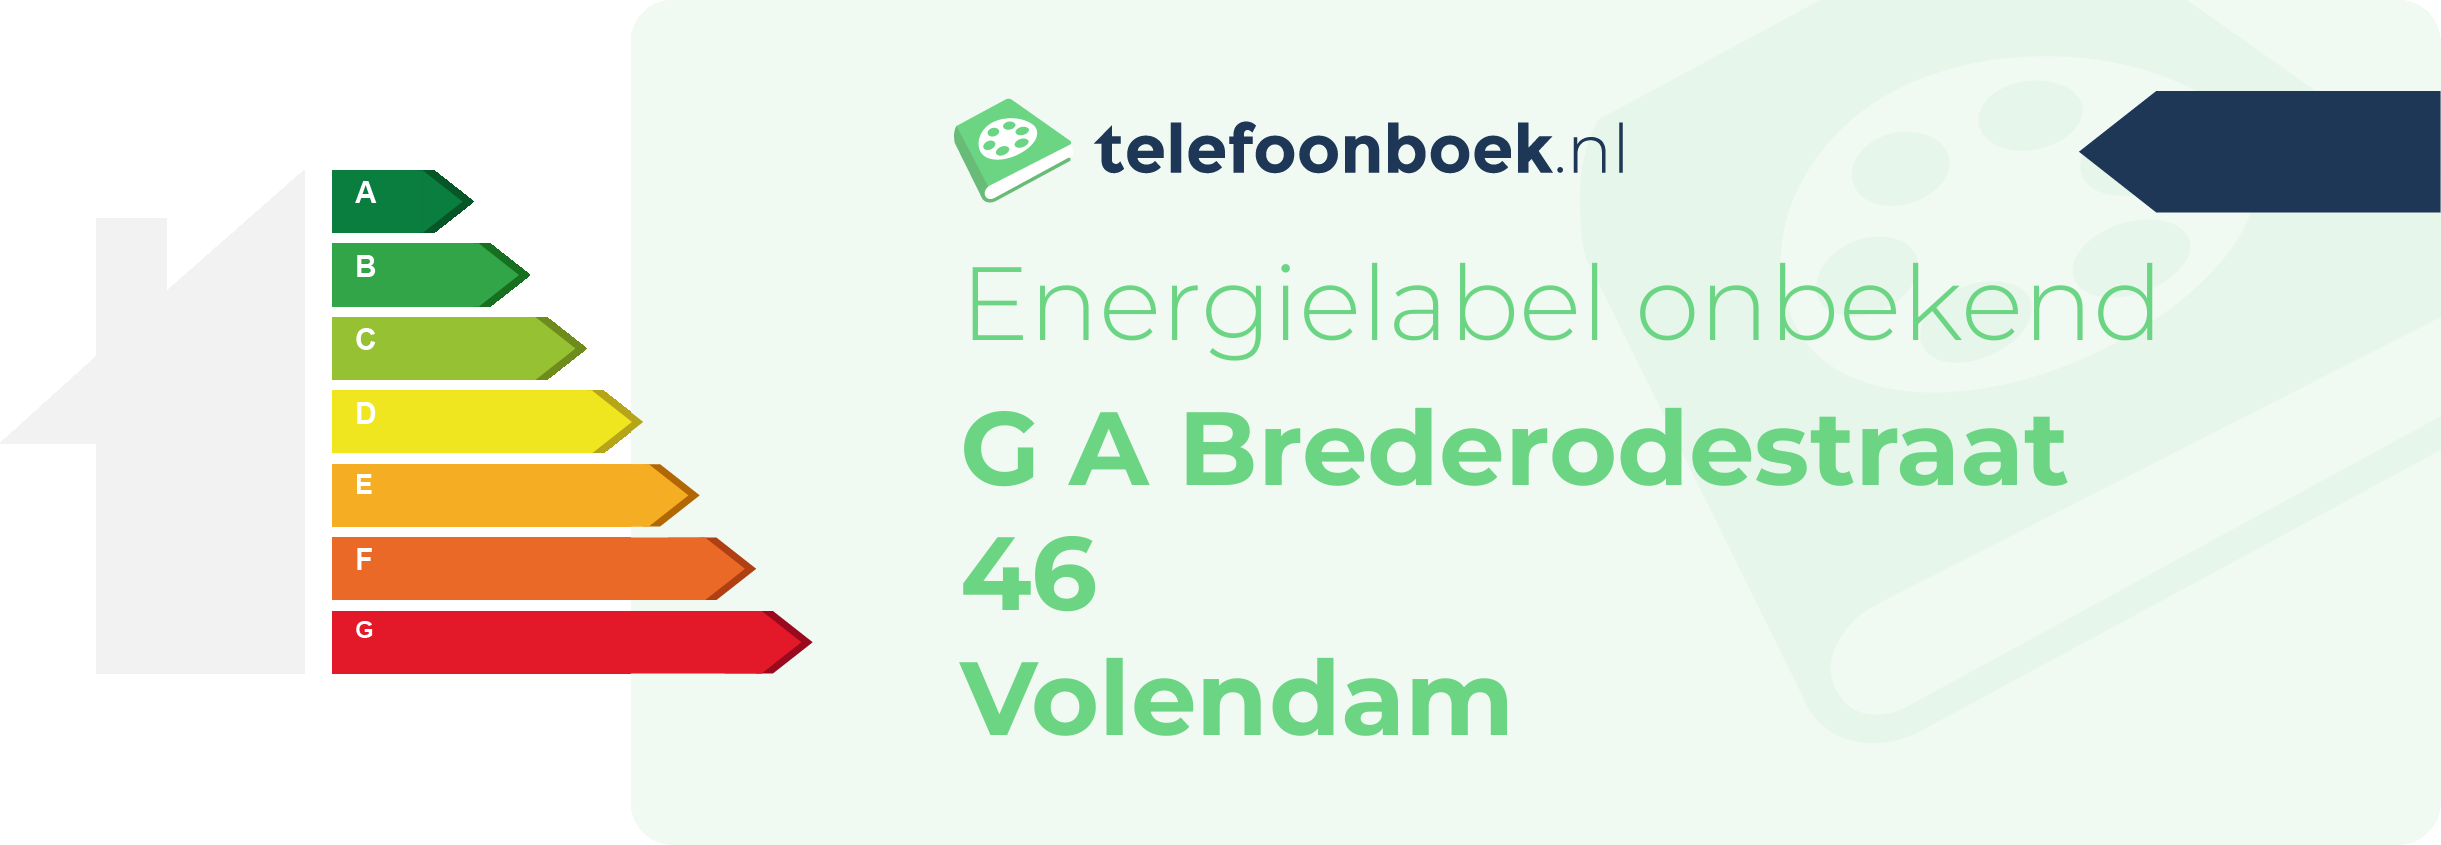 Energielabel G A Brederodestraat 46 Volendam